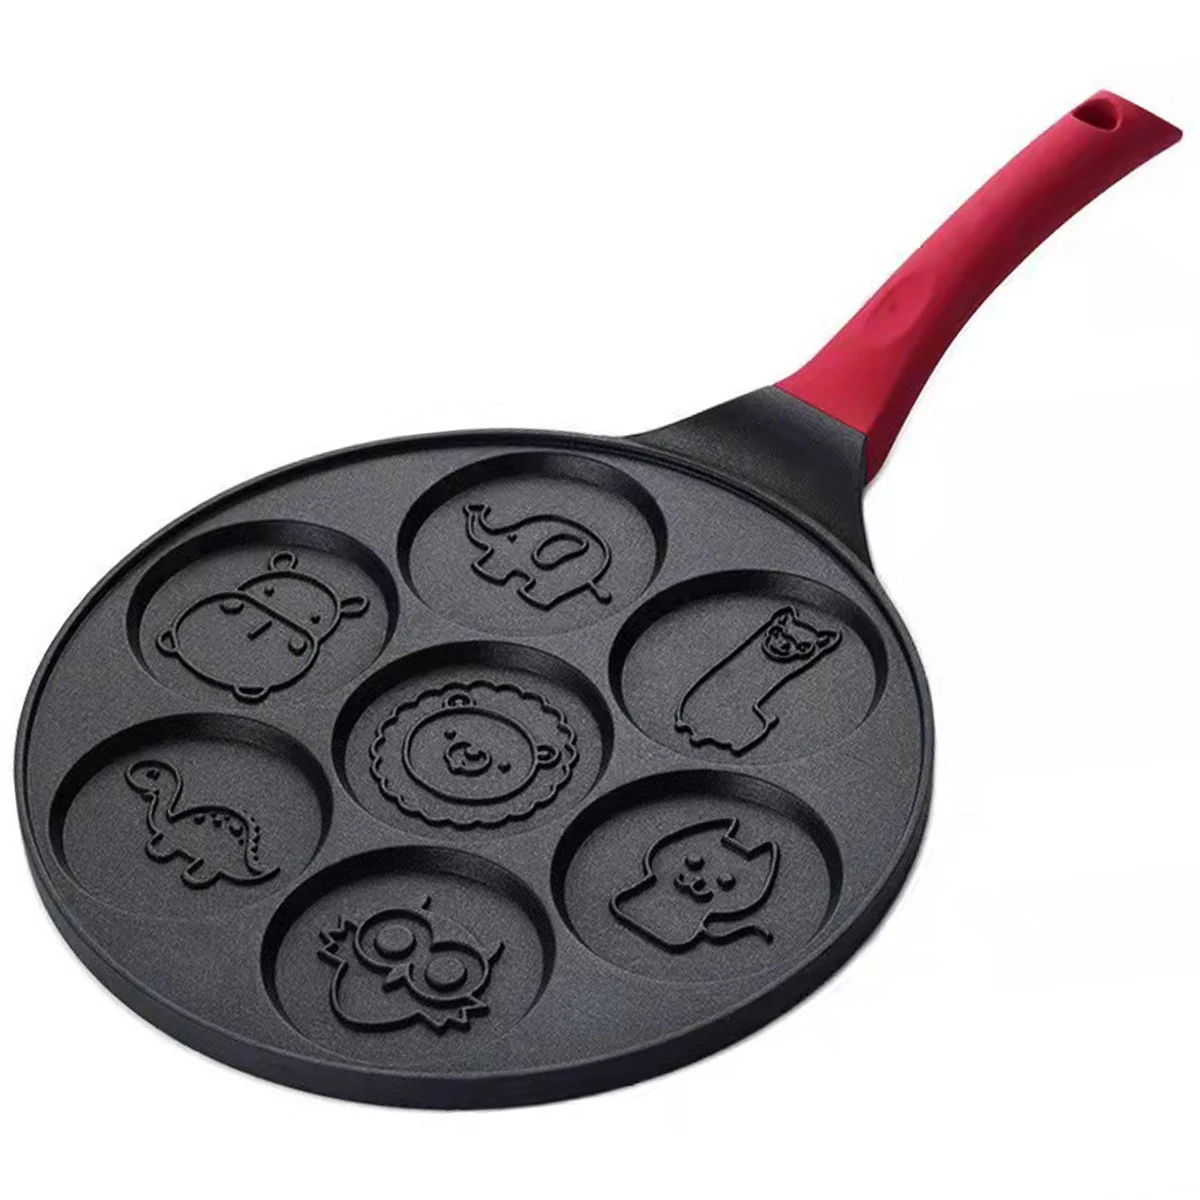 High quality 7-hole long handle non stick pan cartoon frying pan, flat bottom frying pan,Fried and roasted artifact